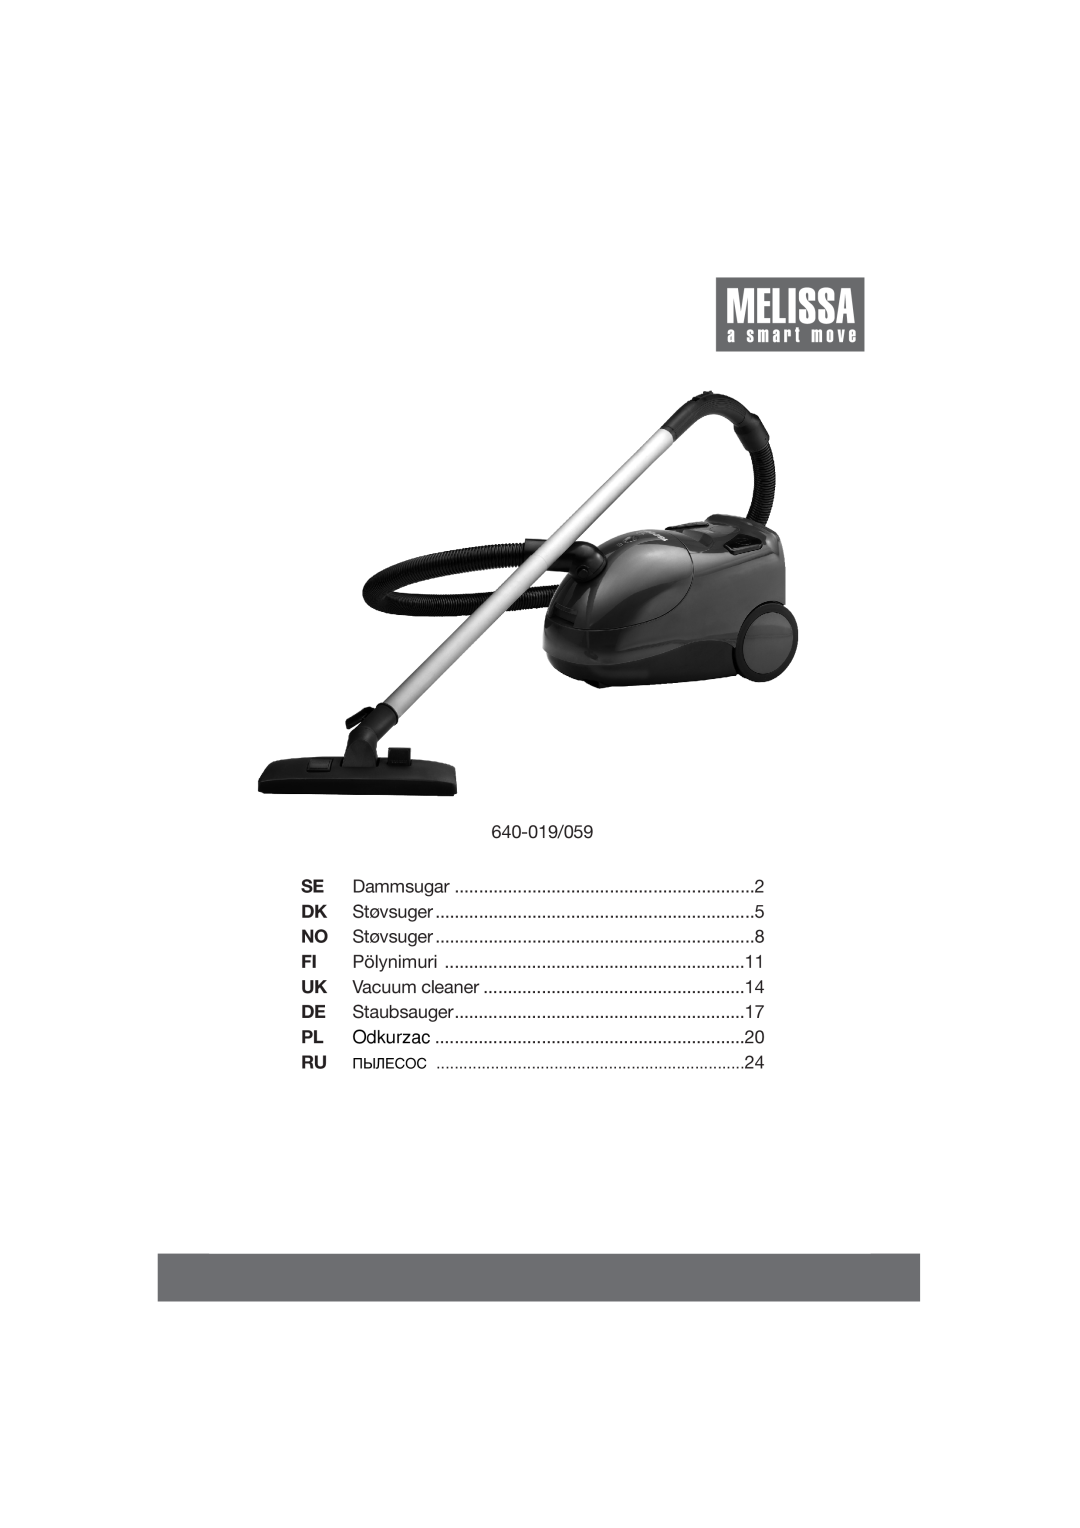 Melissa 640-059 manual 640-019/059, Dammsugar, Støvsuger, Pölynimuri, Vacuum cleaner, Staubsauger, Odkurzac, Пылесос 